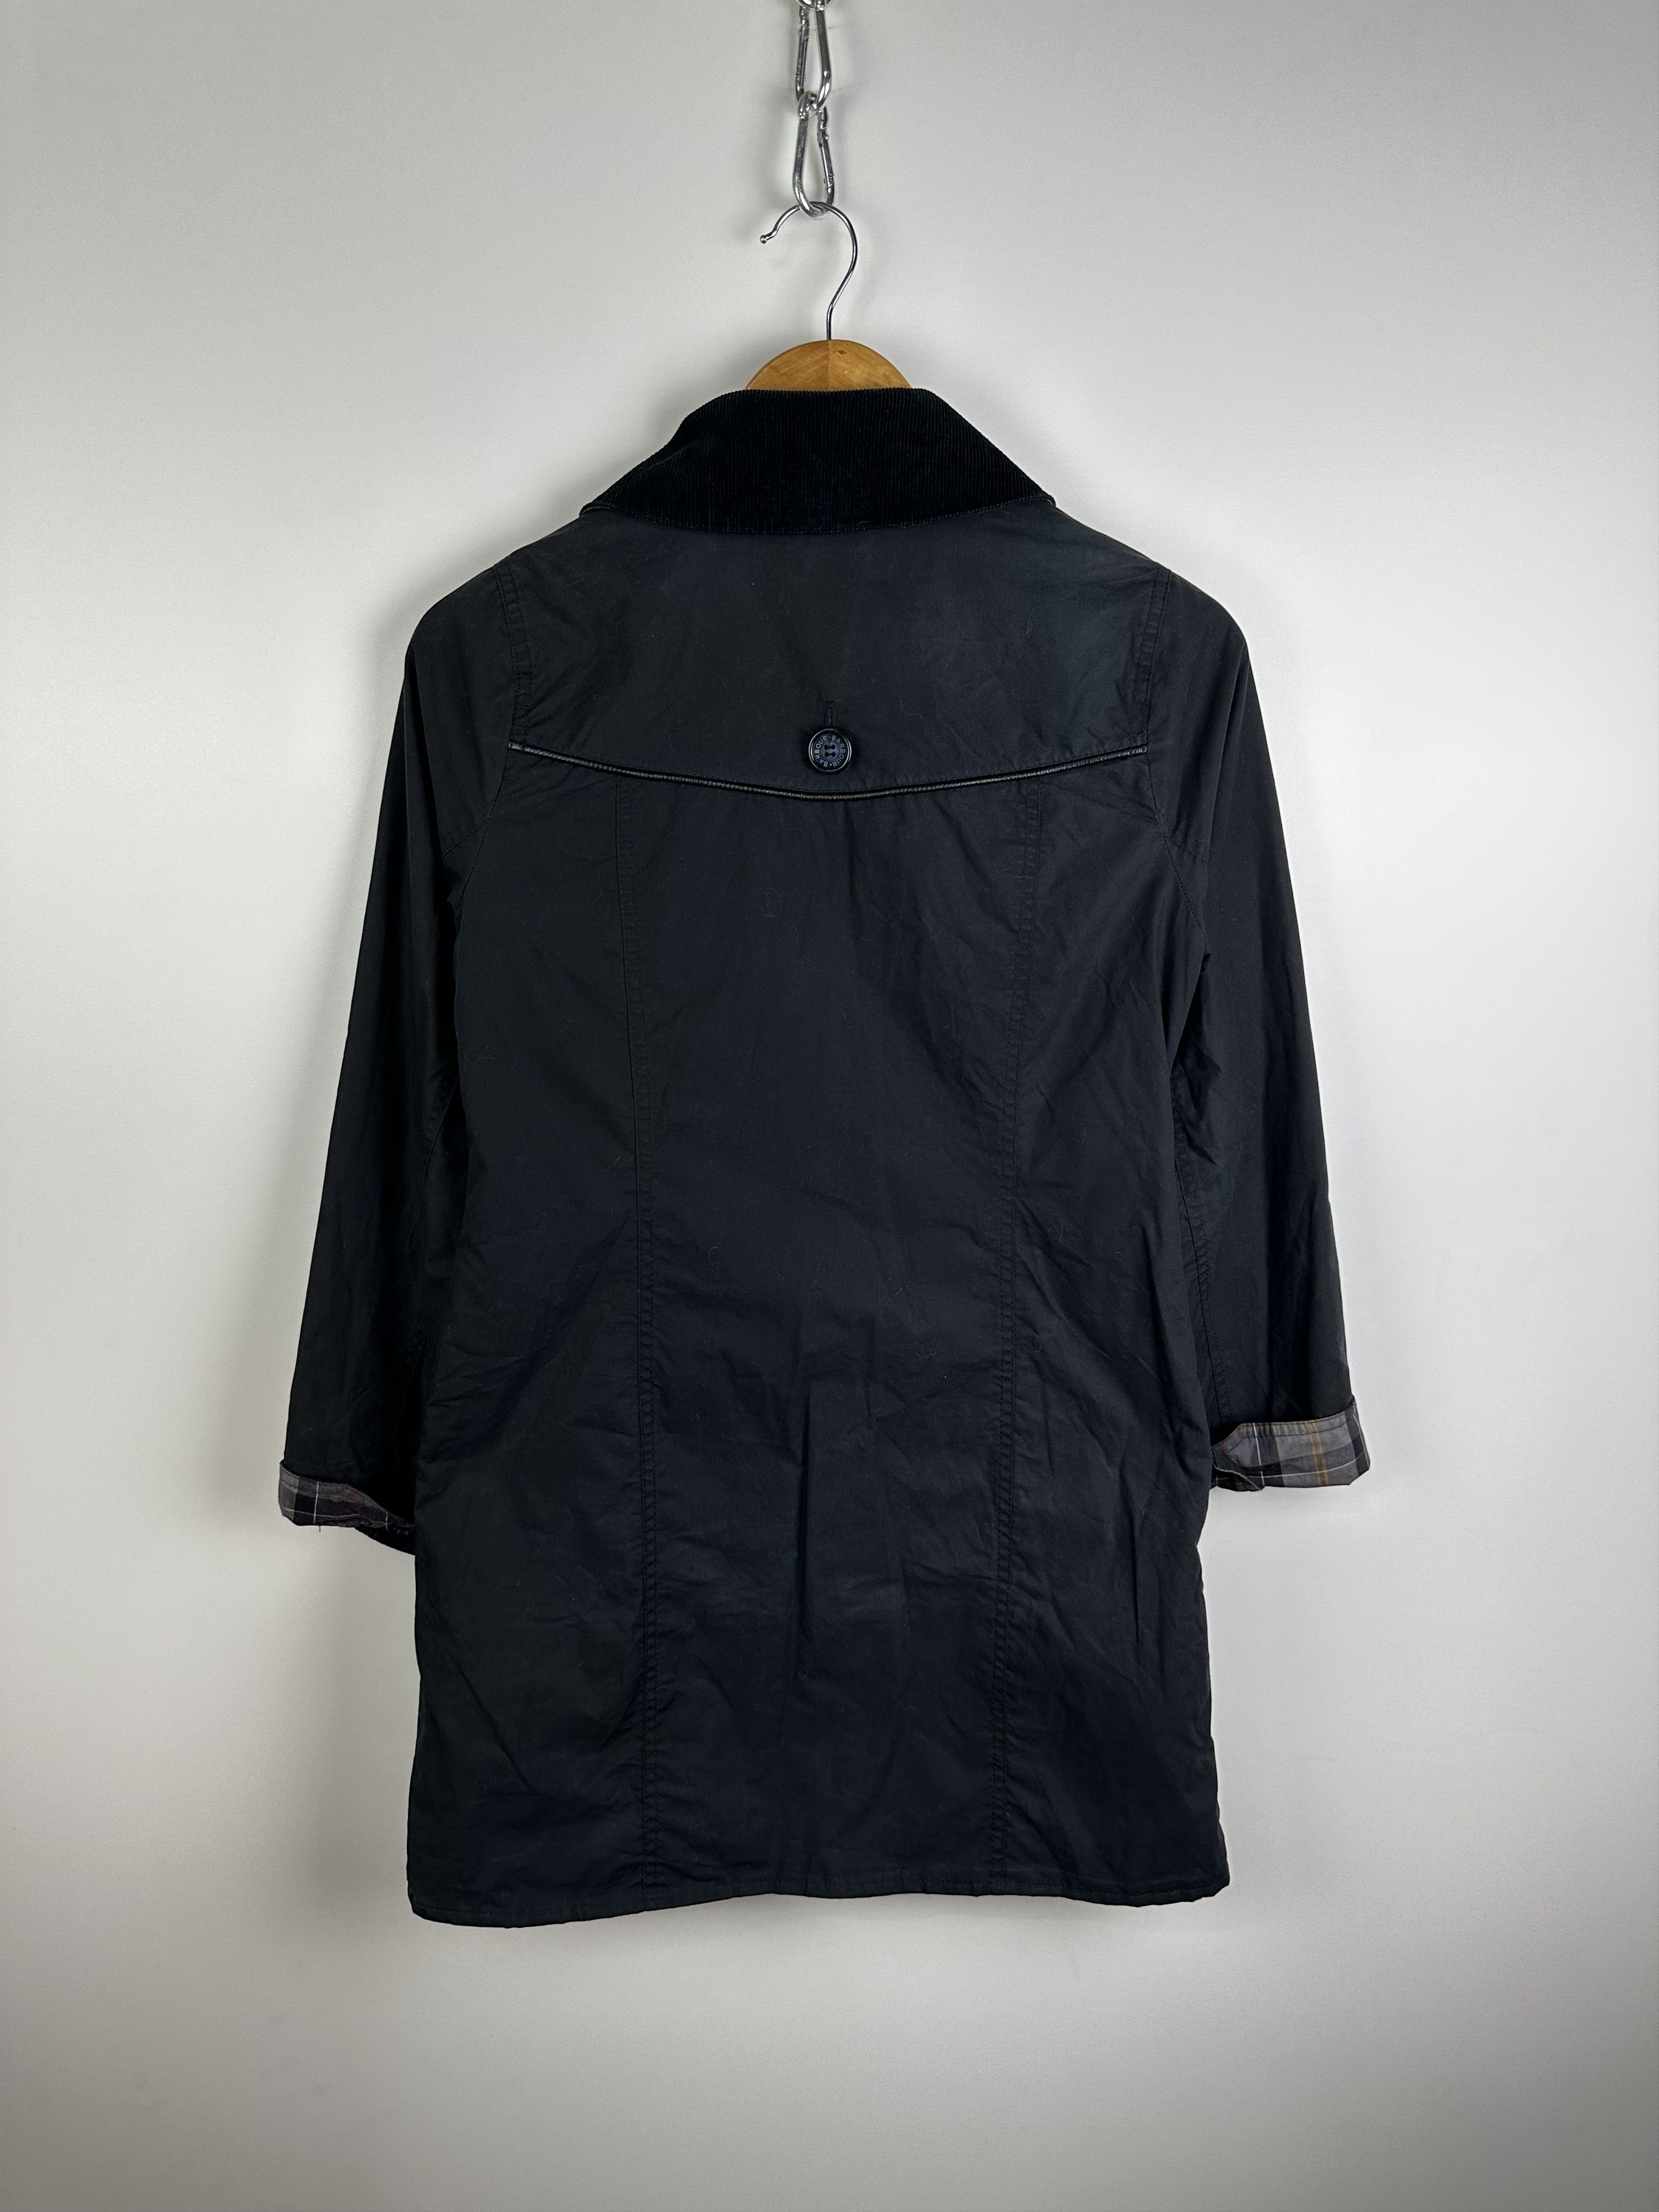 Barbour Women’s Barbour Grasmoor Waxed Jacket Coat Black Size US4 Size S / US 4 / IT 40 - 7 Thumbnail